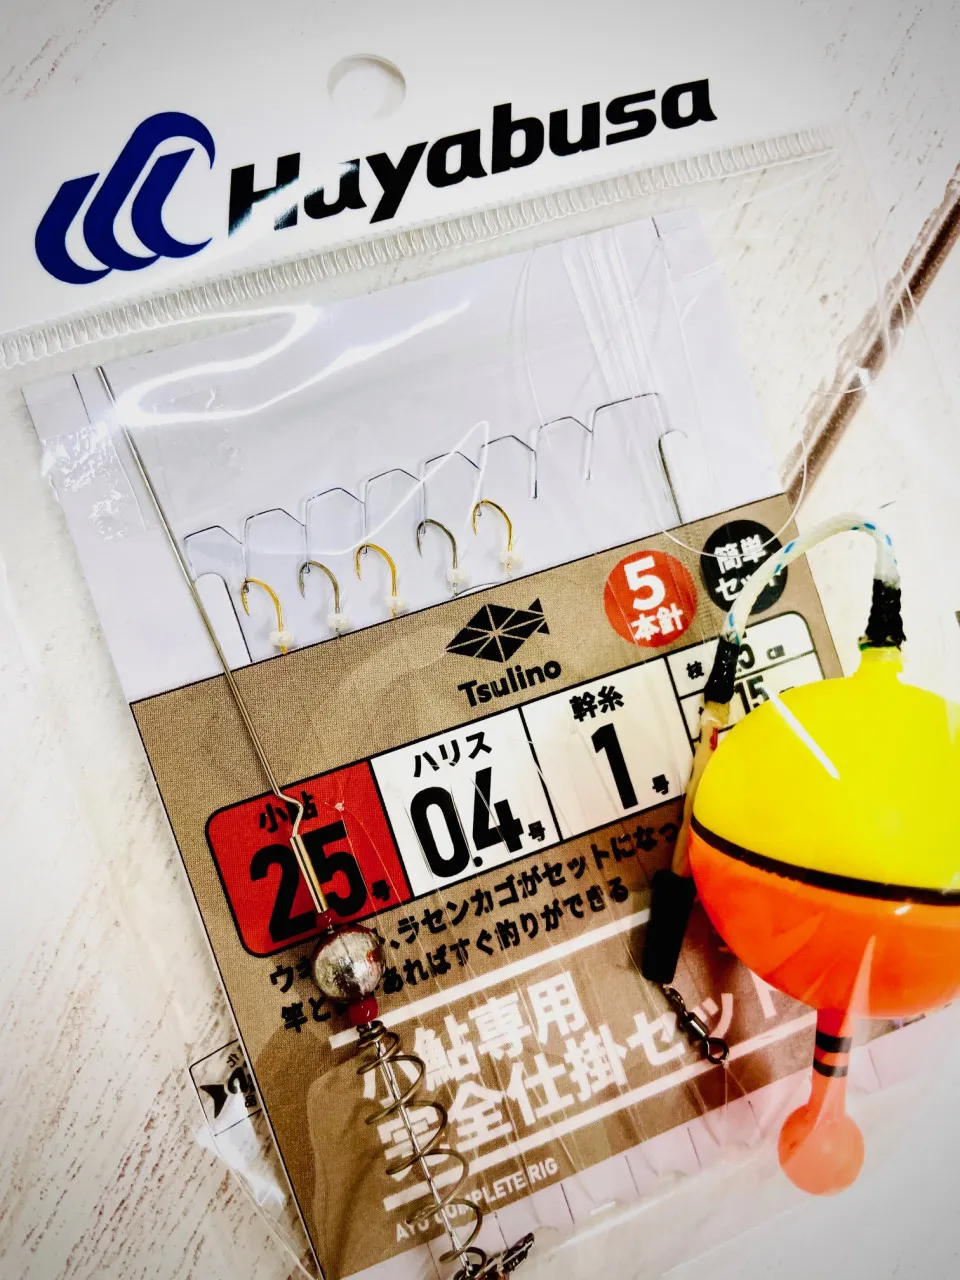 Hayabusa Tsulino 初めてでも簡単チャレンジ 小鮎用完全仕掛けセットをリリース イシグロ バイヤー 釣具のイシグロ 釣り情報サイト